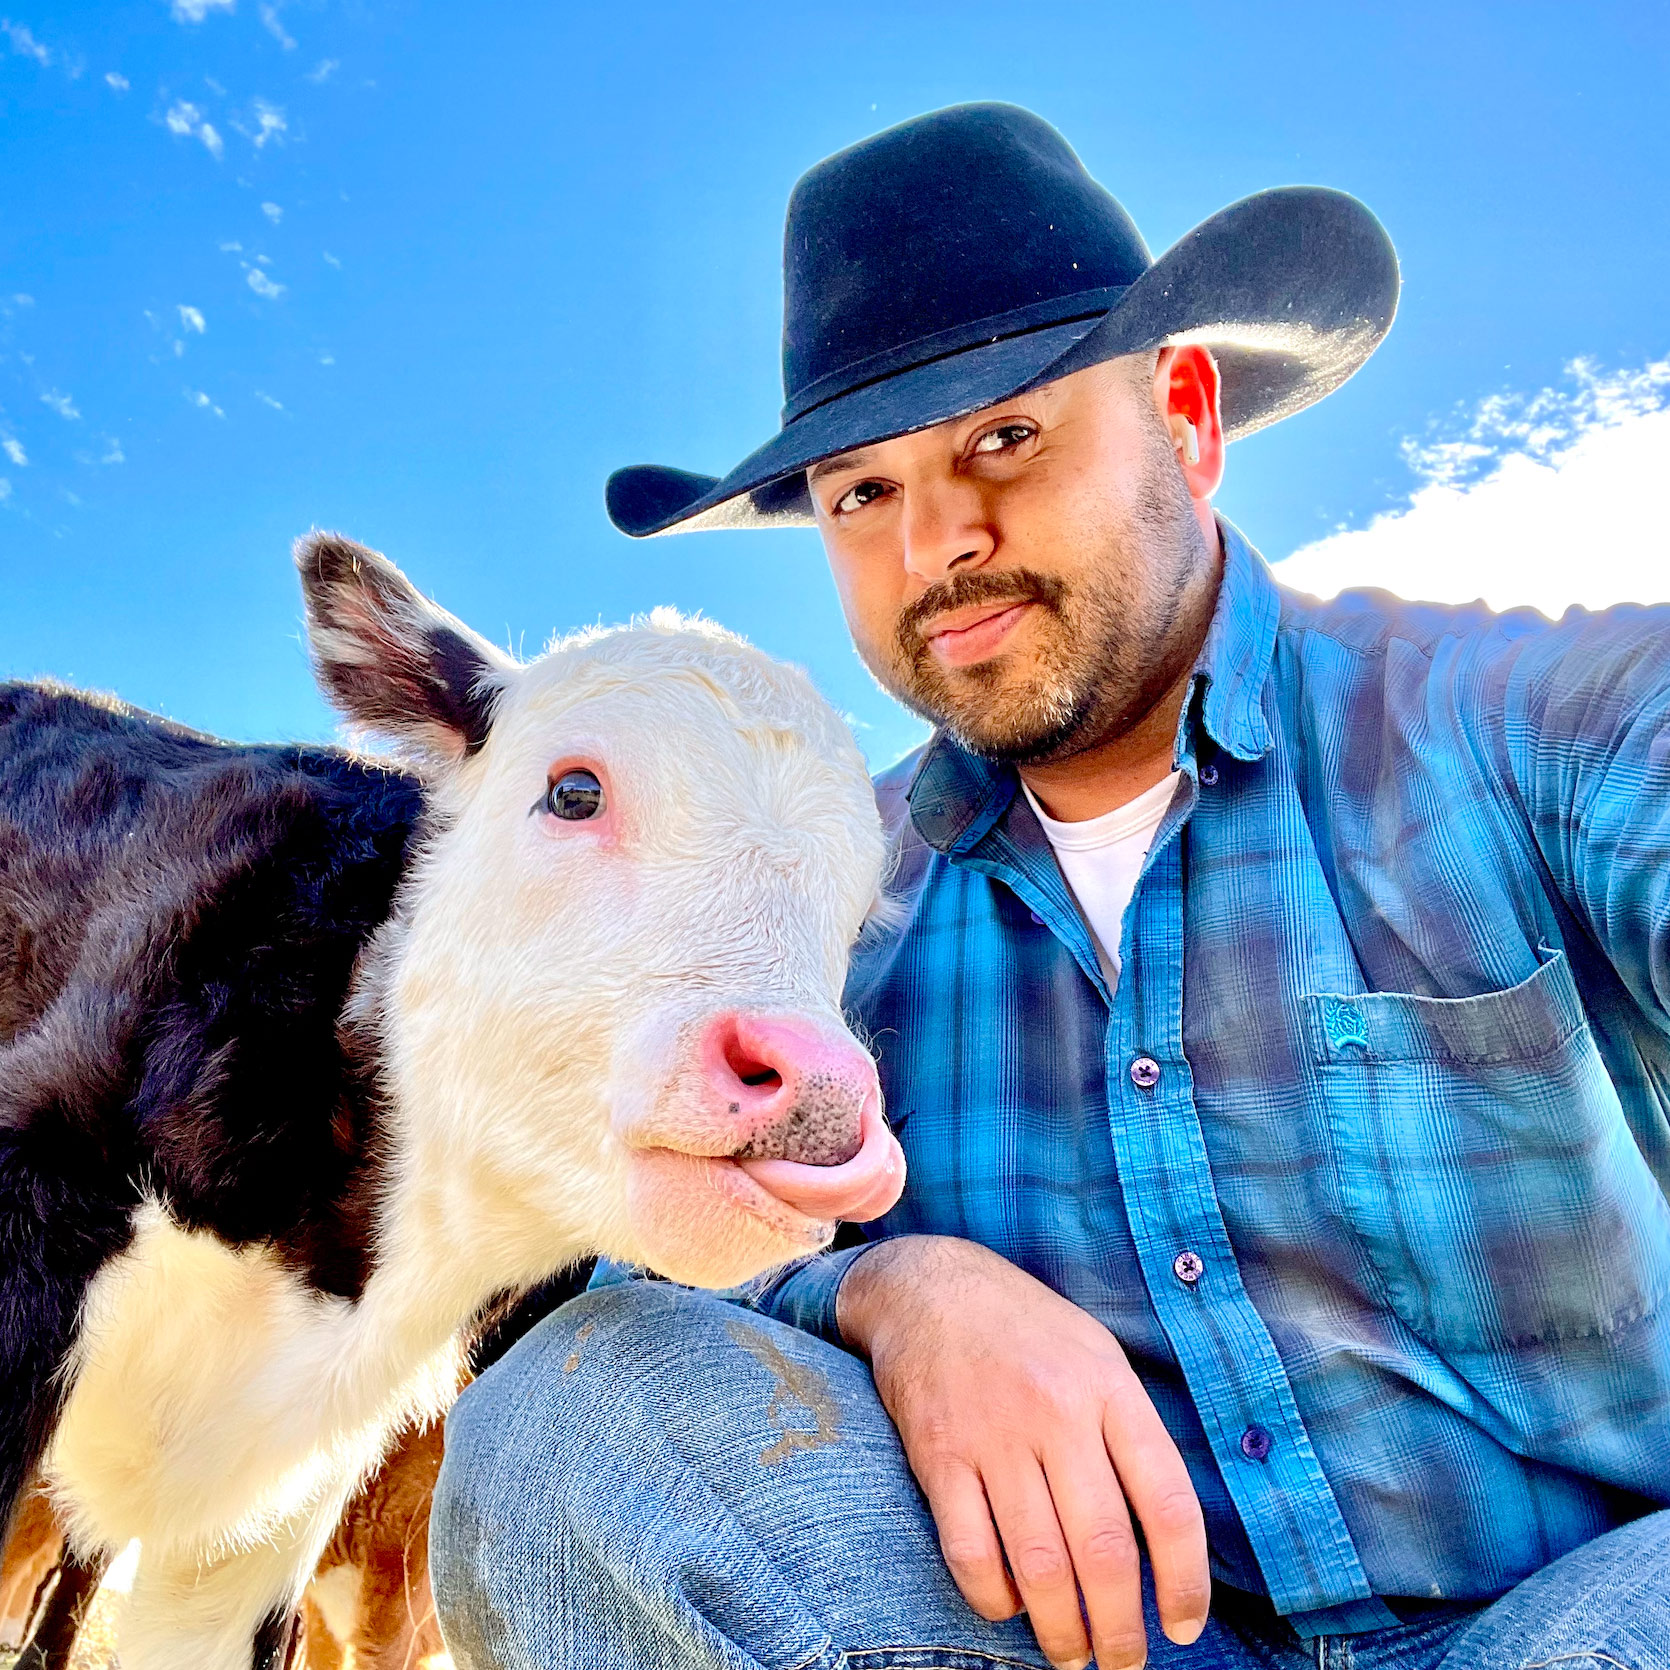 Orlando Ochoa posing for a selfie with a baby cow